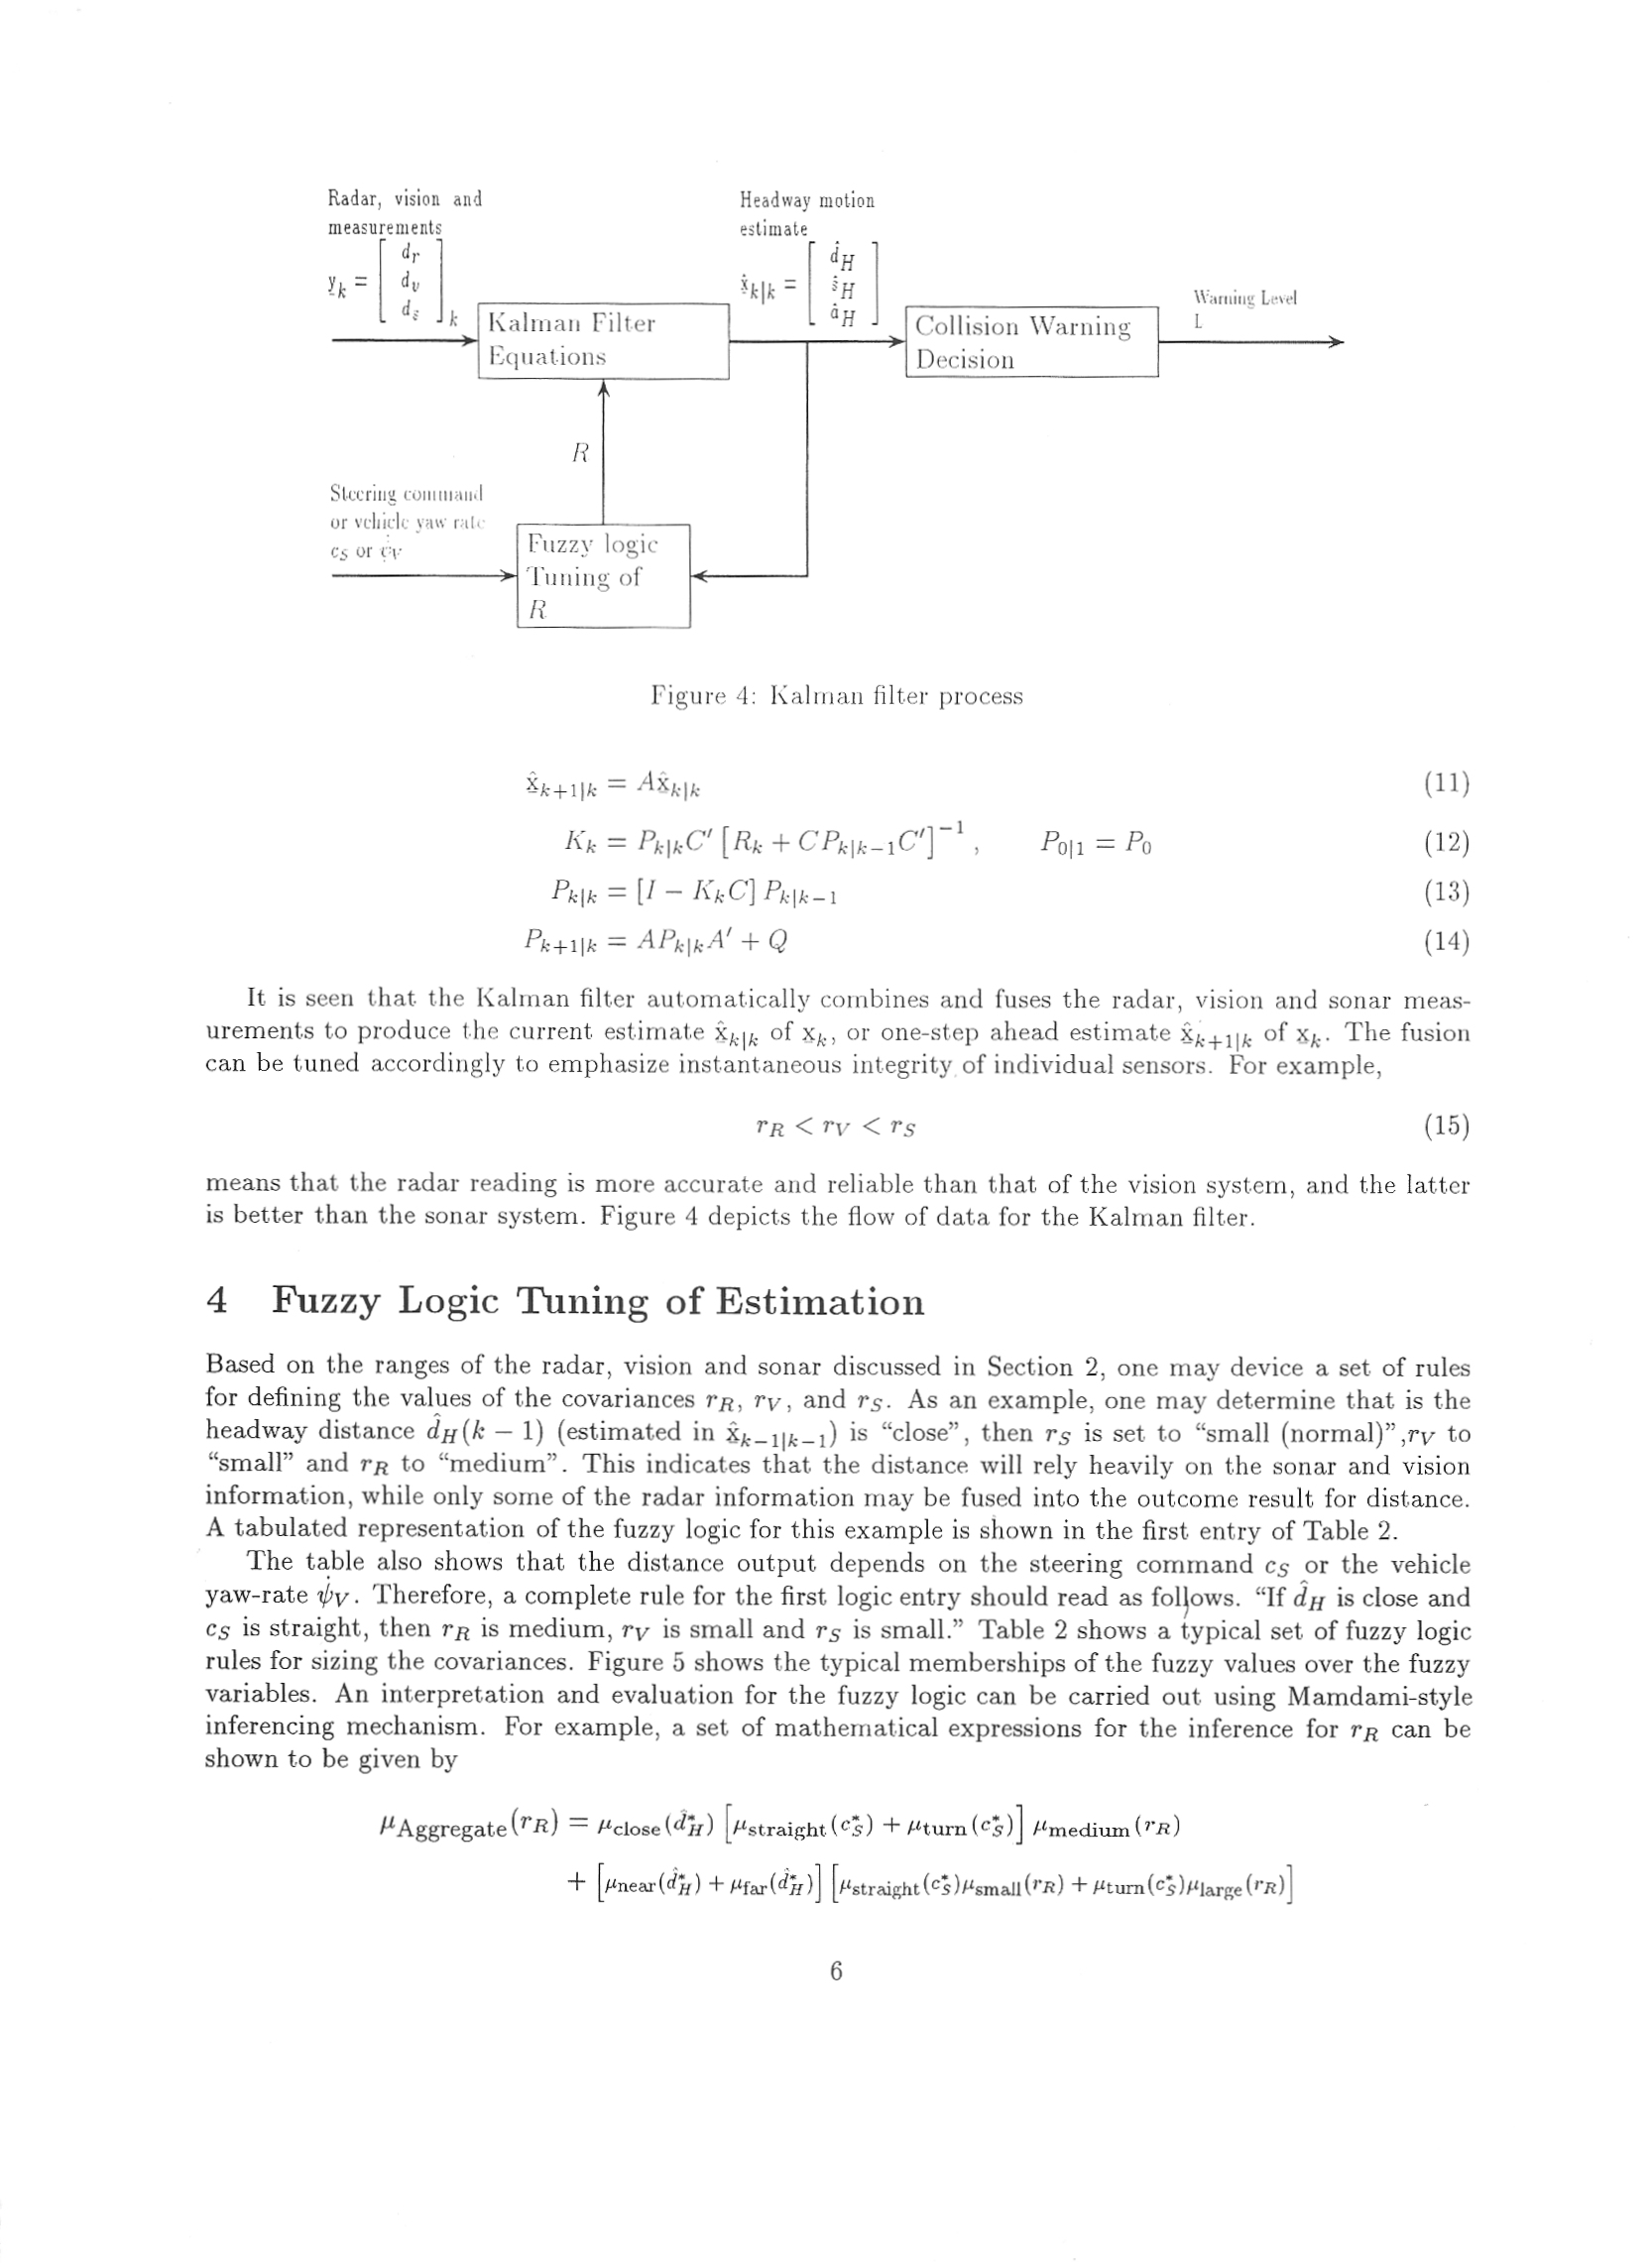 Kalman Filter Process and Fuzzy Logic Tuning of Estimation